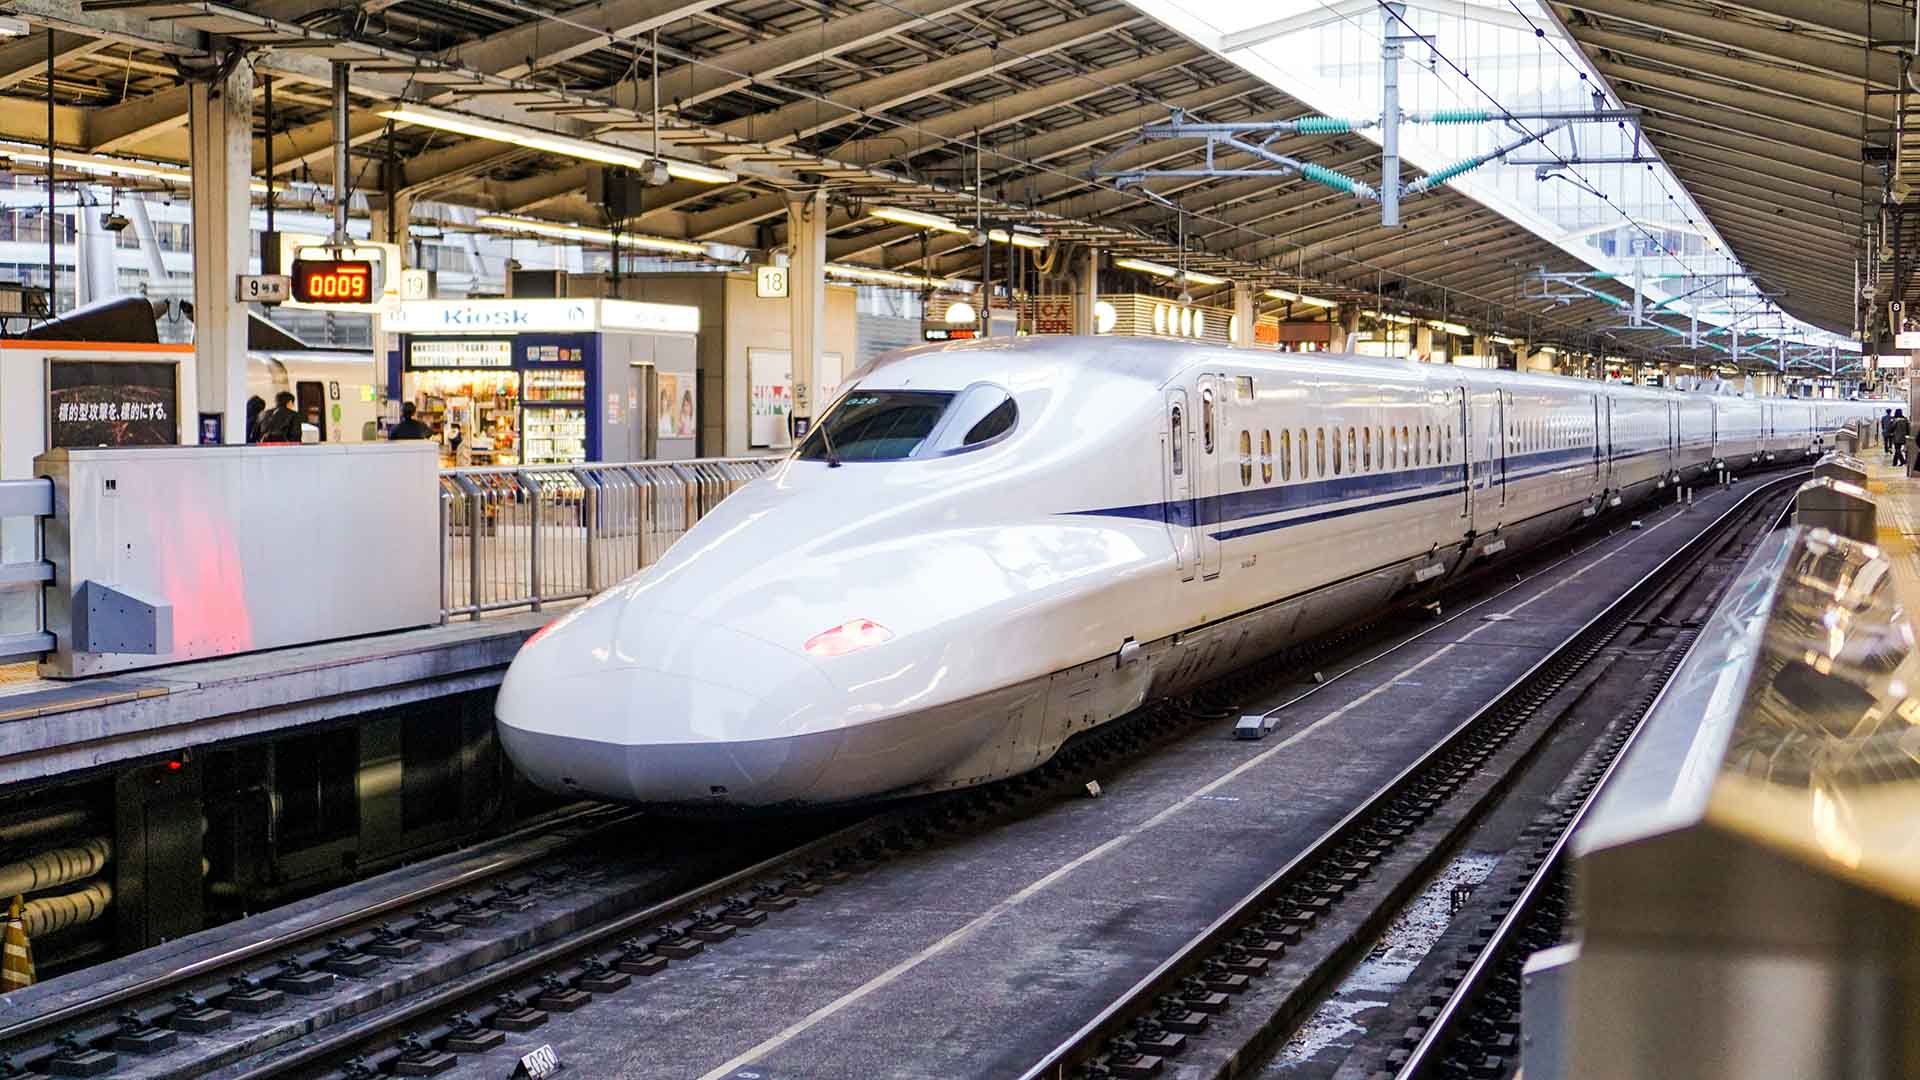 Bullet train, shinkansen, in the station in Tokyo, Japan